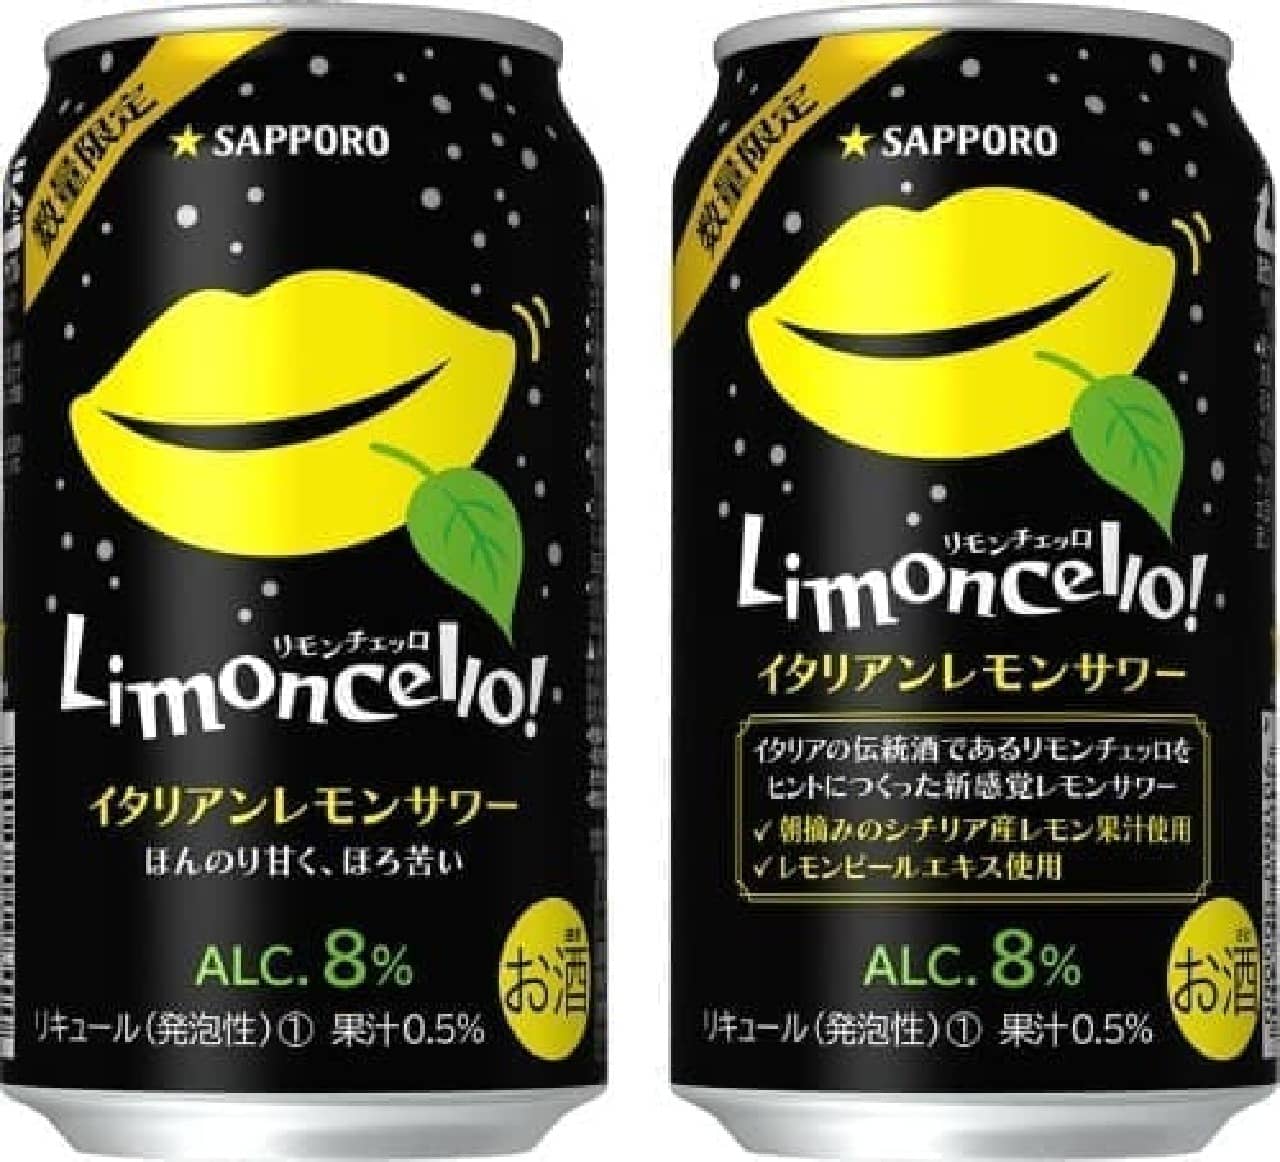 Sapporo Beer "Sapporo Limoncello Italian Lemon Sour"